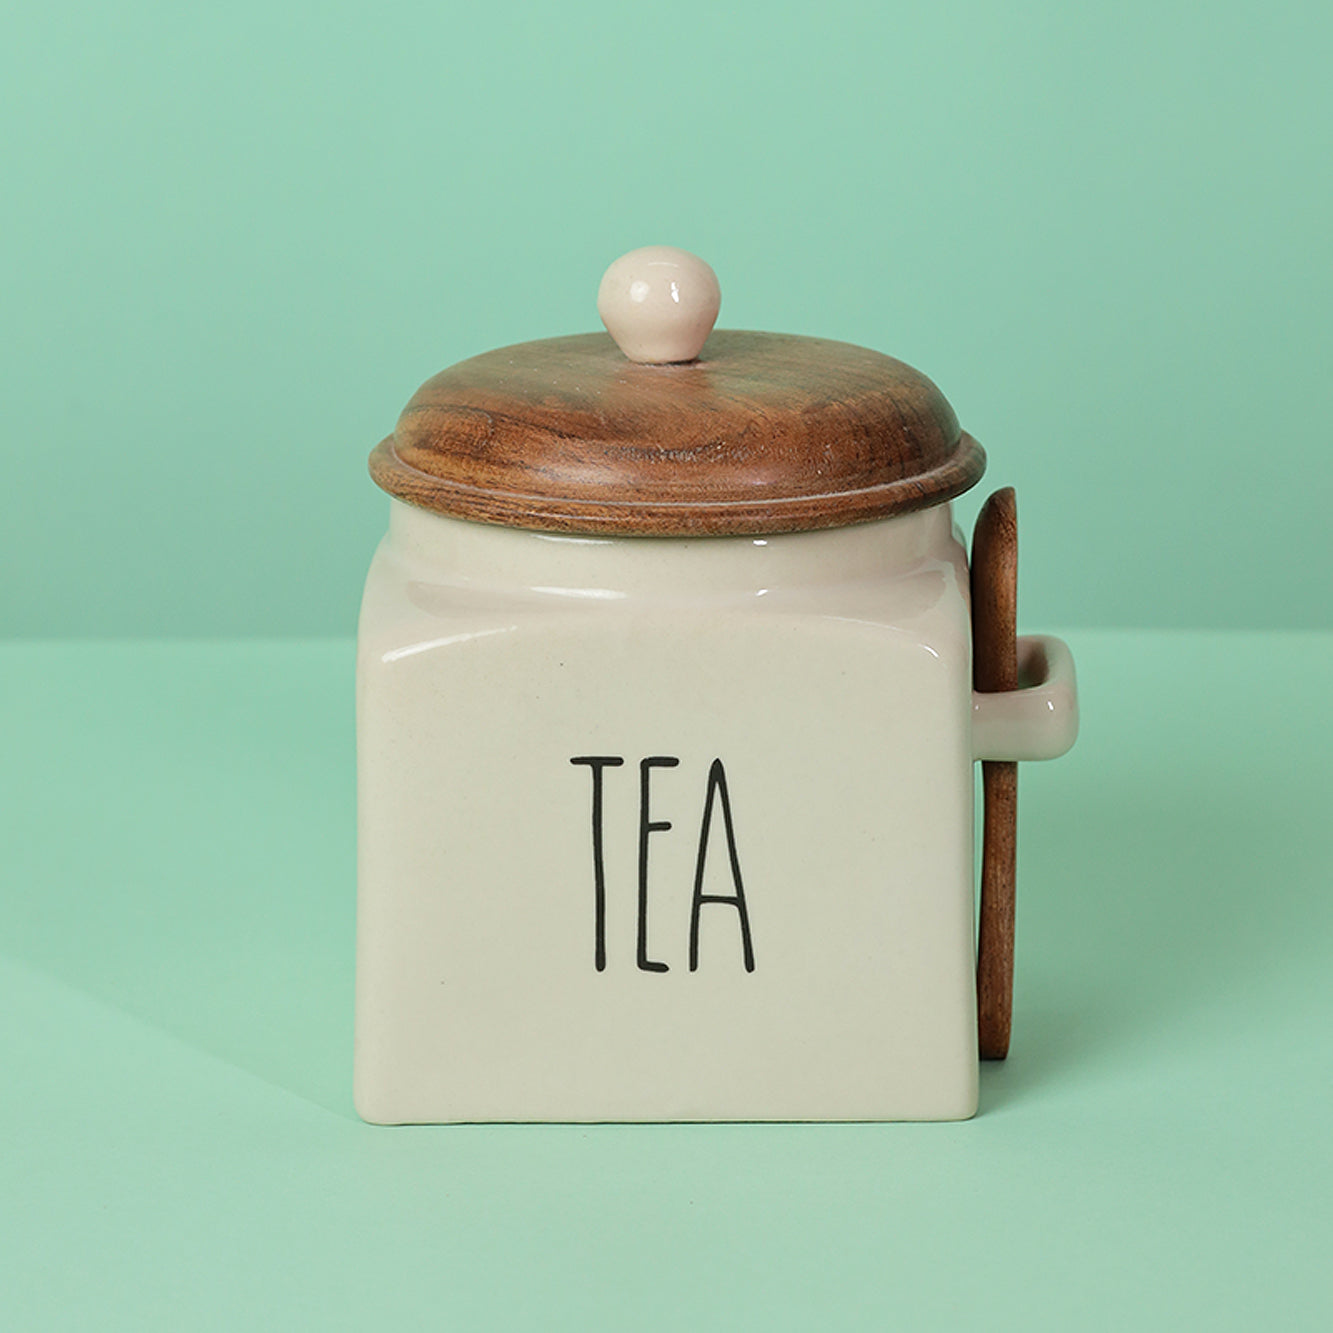 Mesmerising Glossy White Tea Storage Jar